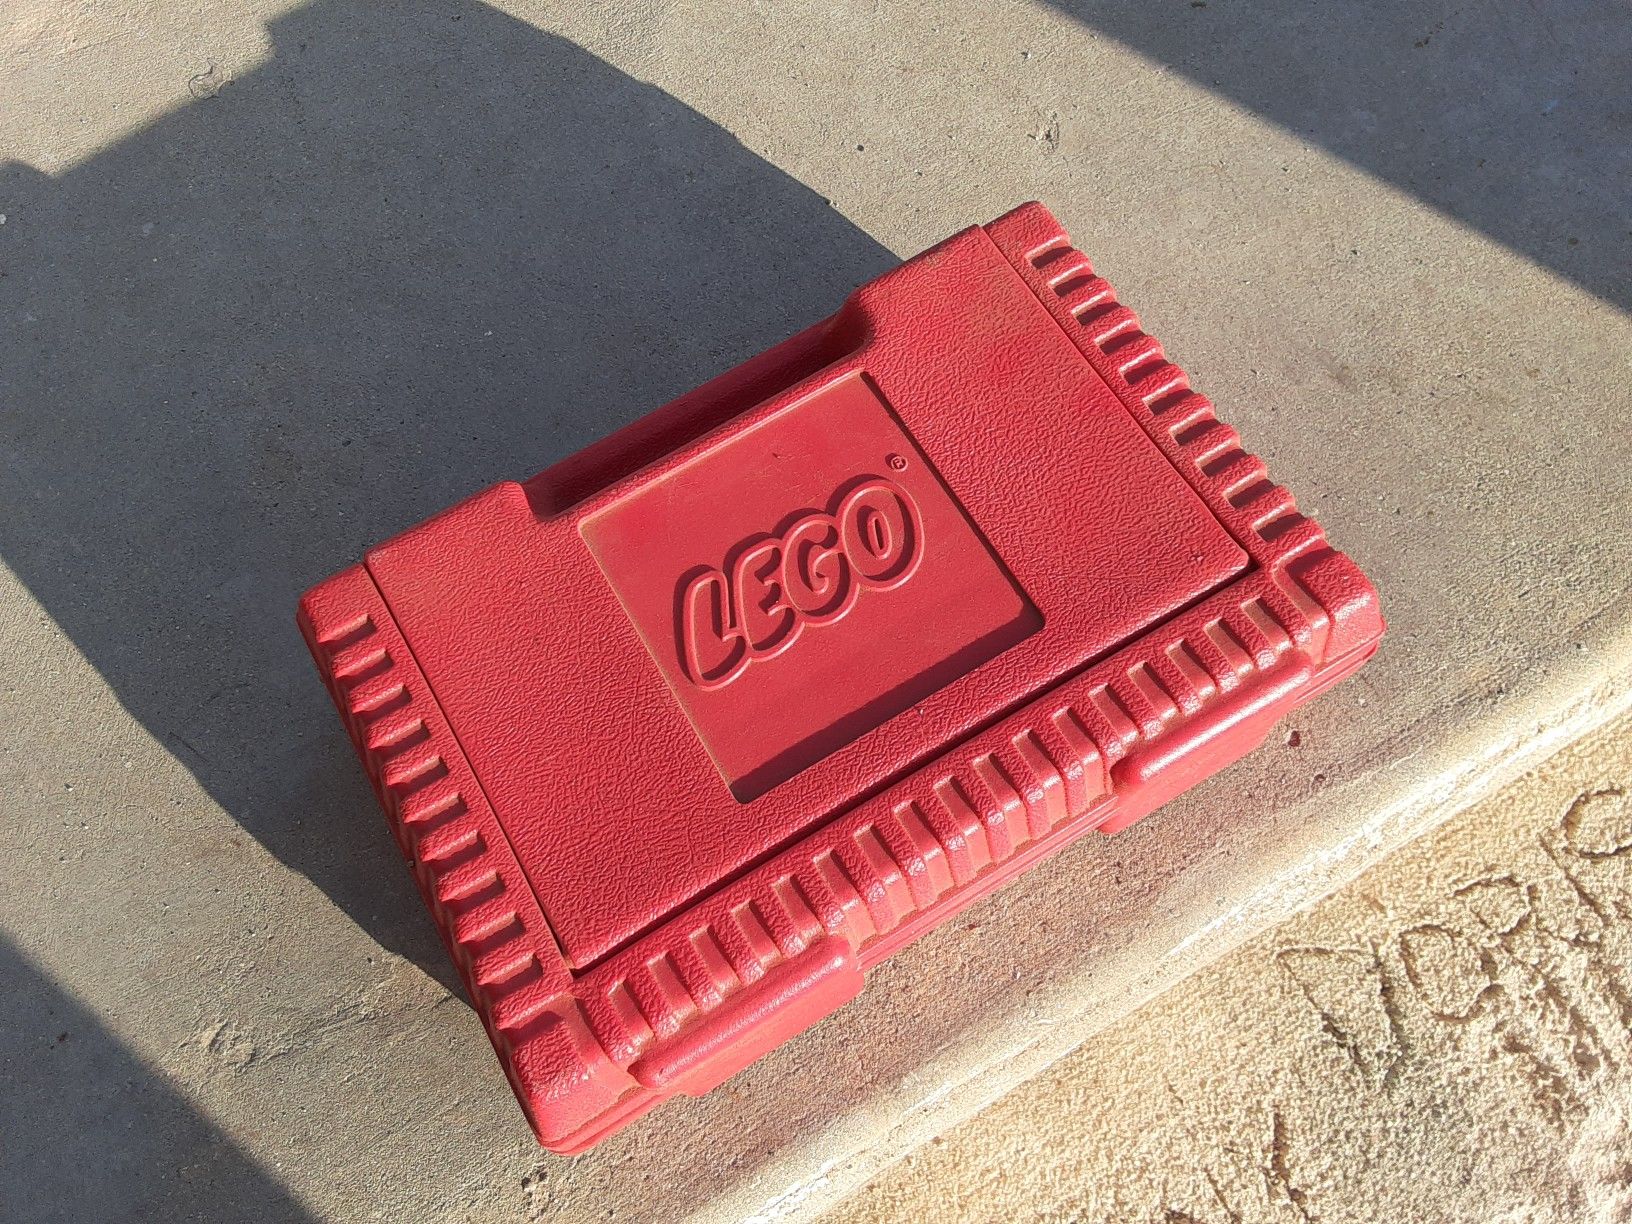 1984-85 original Lego storage box